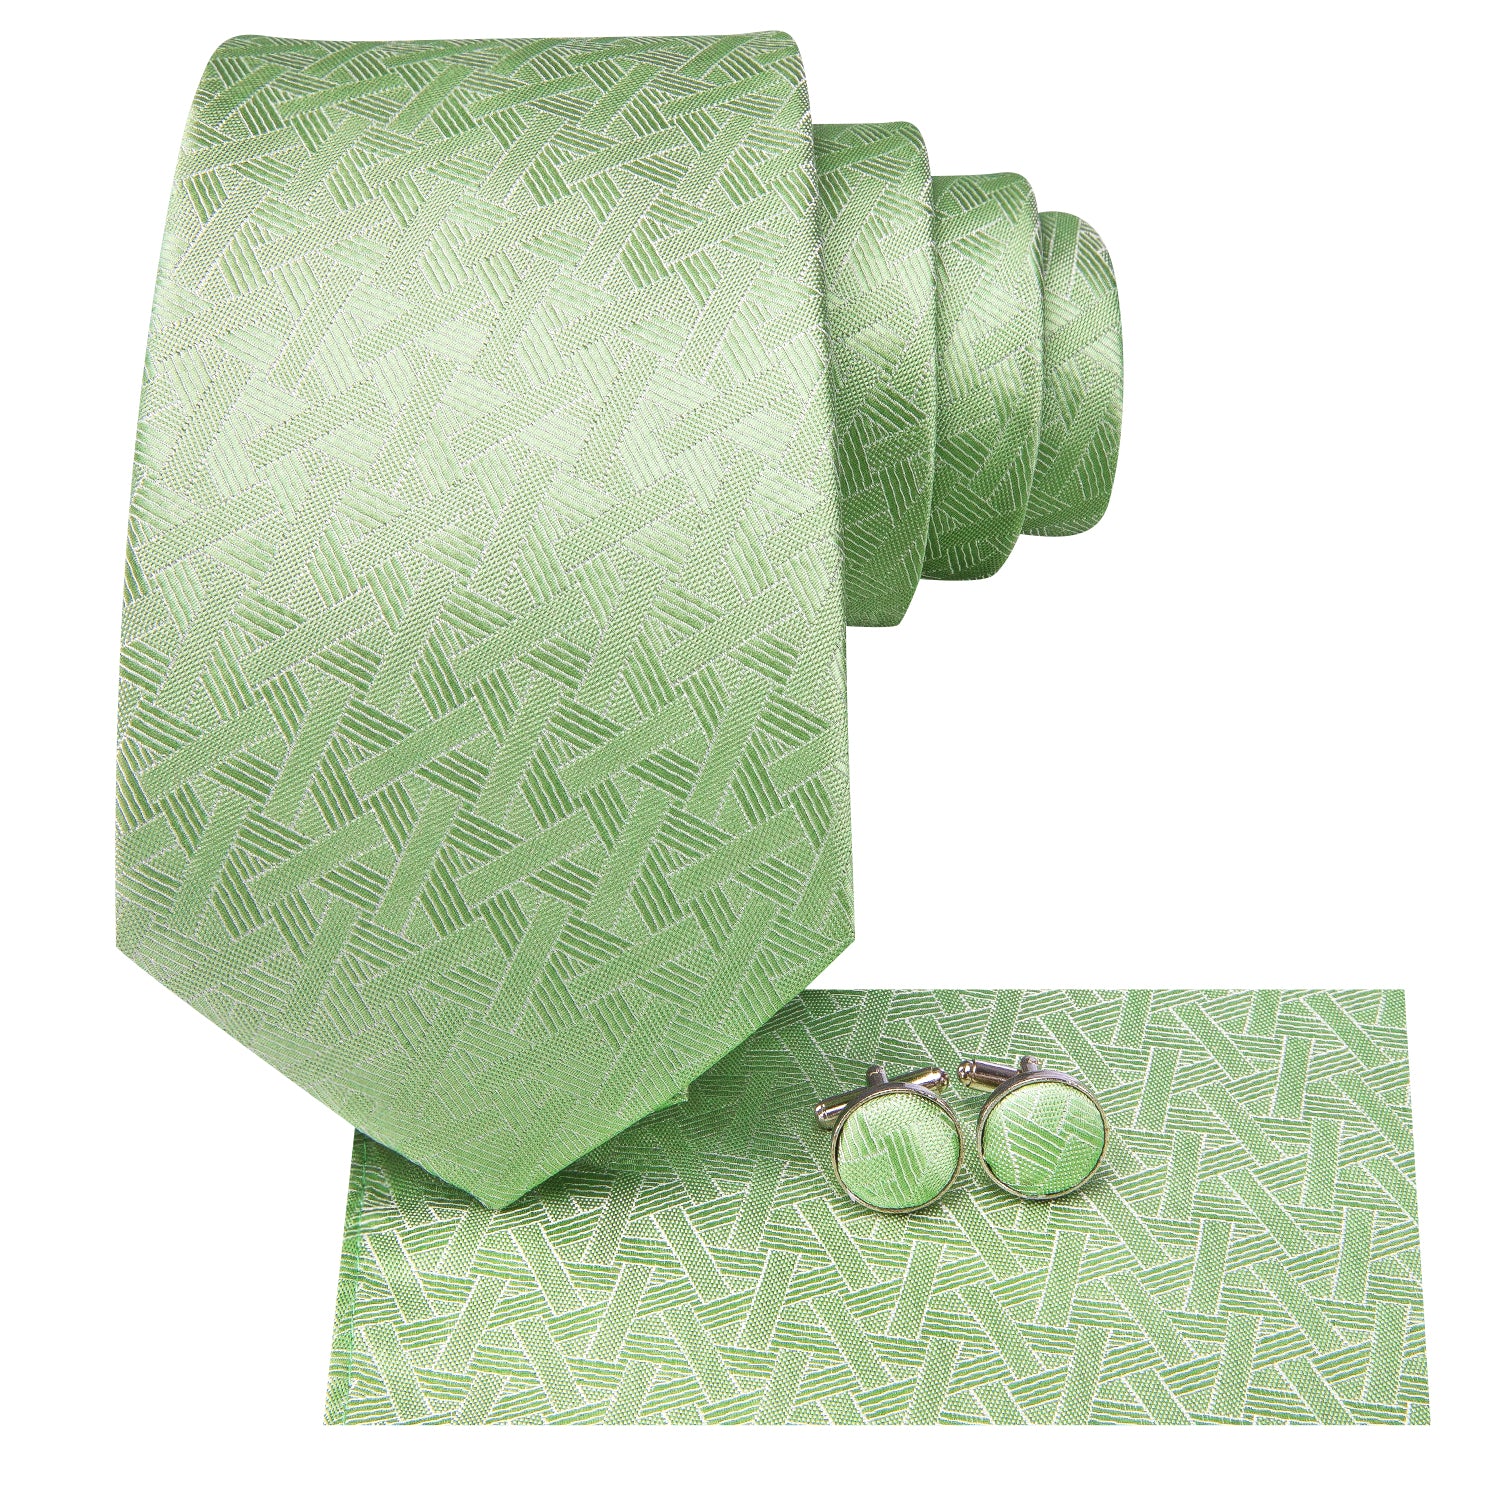 Hi-Tie Mint Green Weave Men's Tie Pocket Square Cufflinks Set